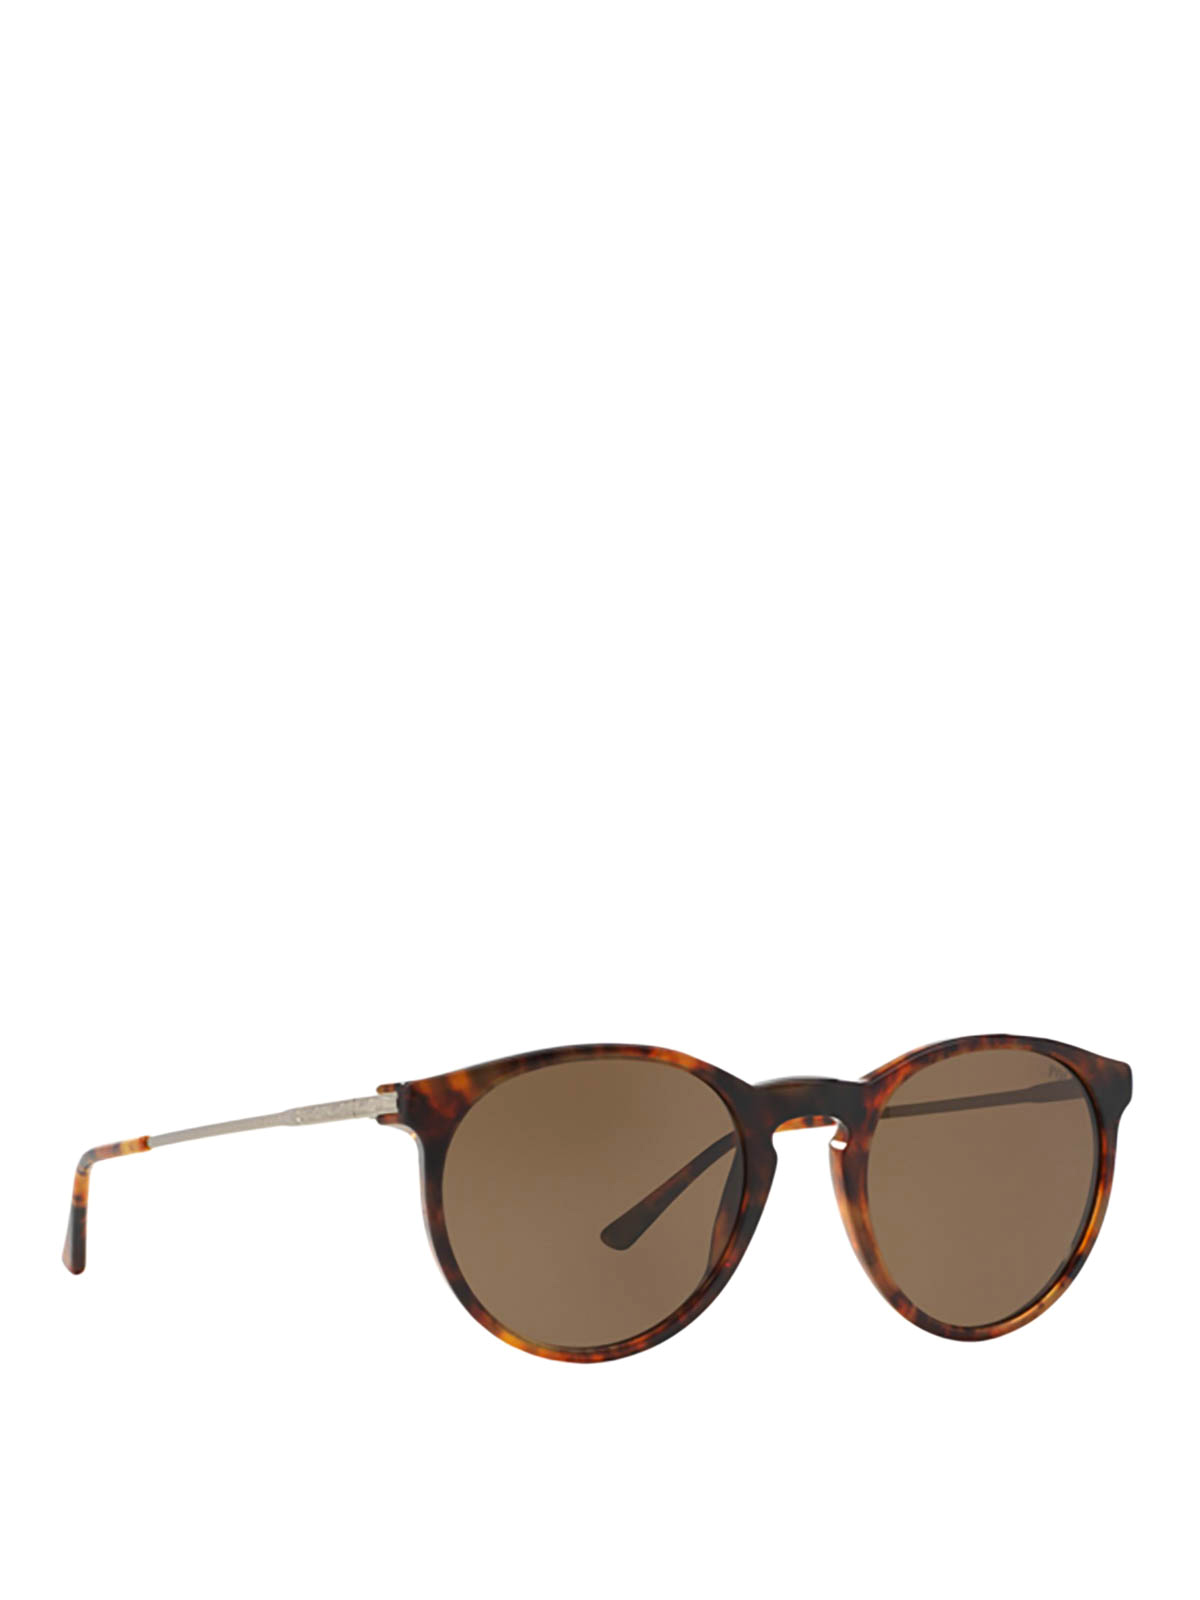 Sunglasses Polo Ralph Lauren - Tortoiseshell panthos sunglasses -  PH4096501773